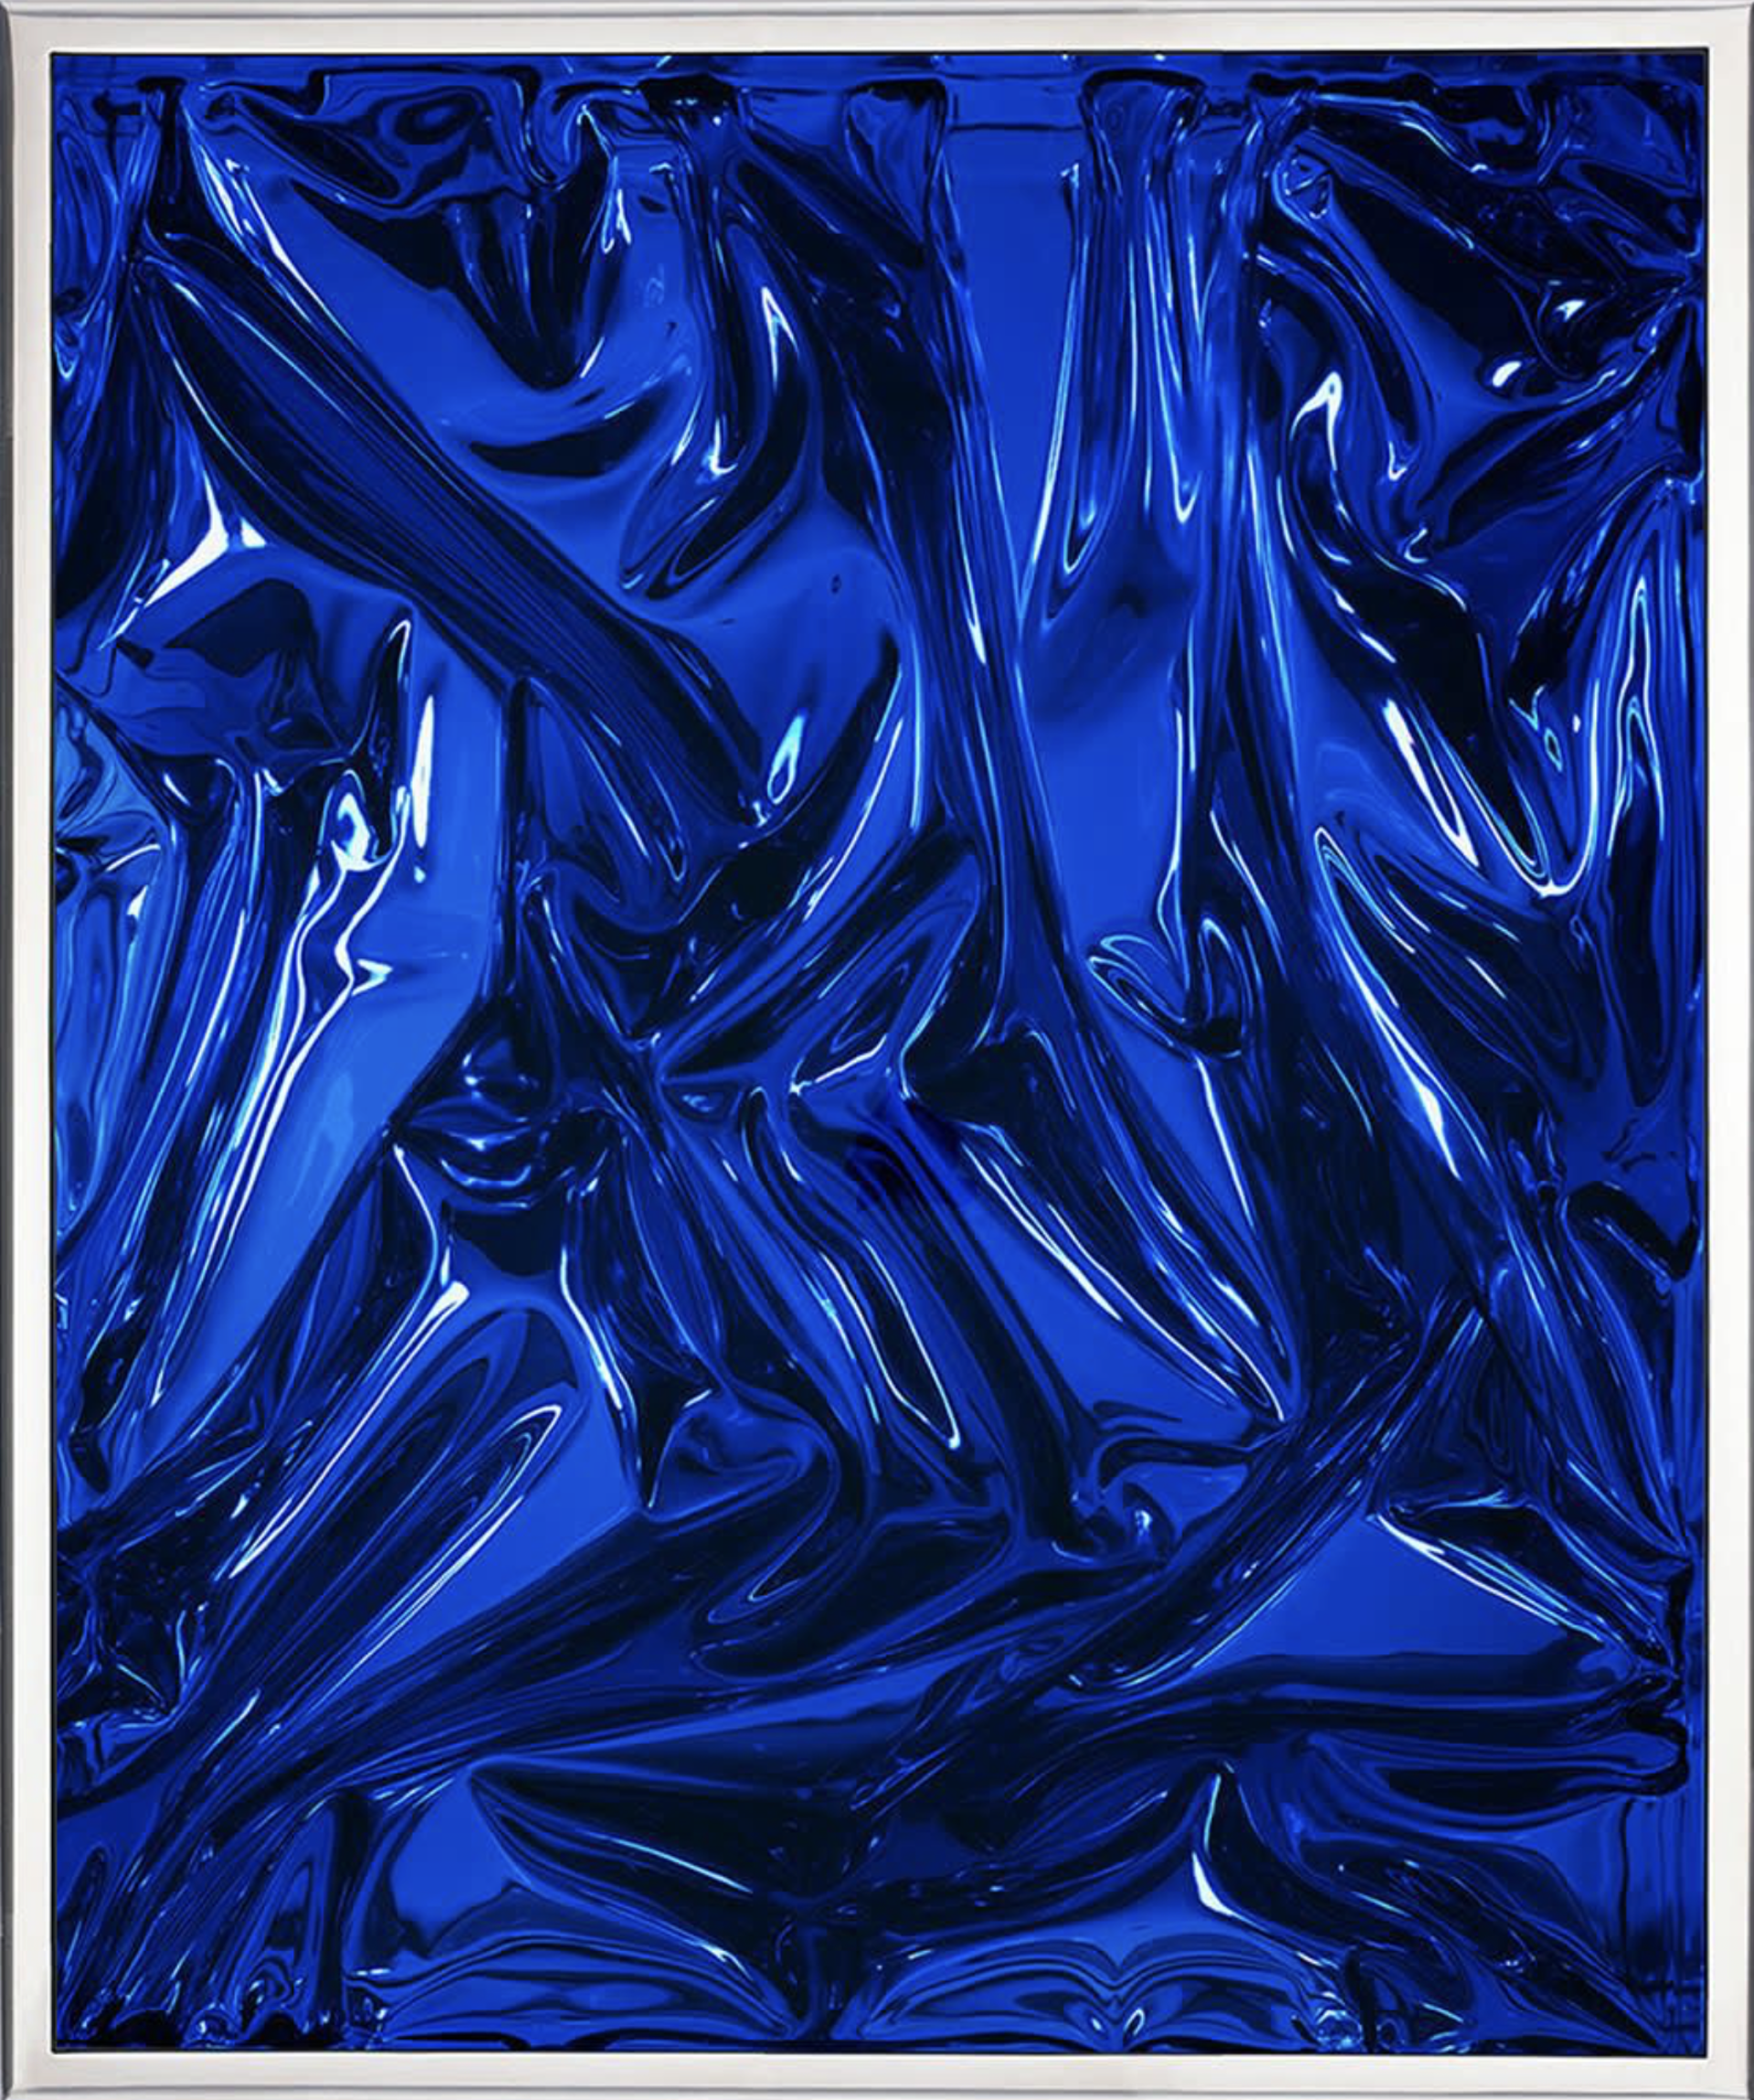 UNICUM (blue) by Mauro Perucchetti